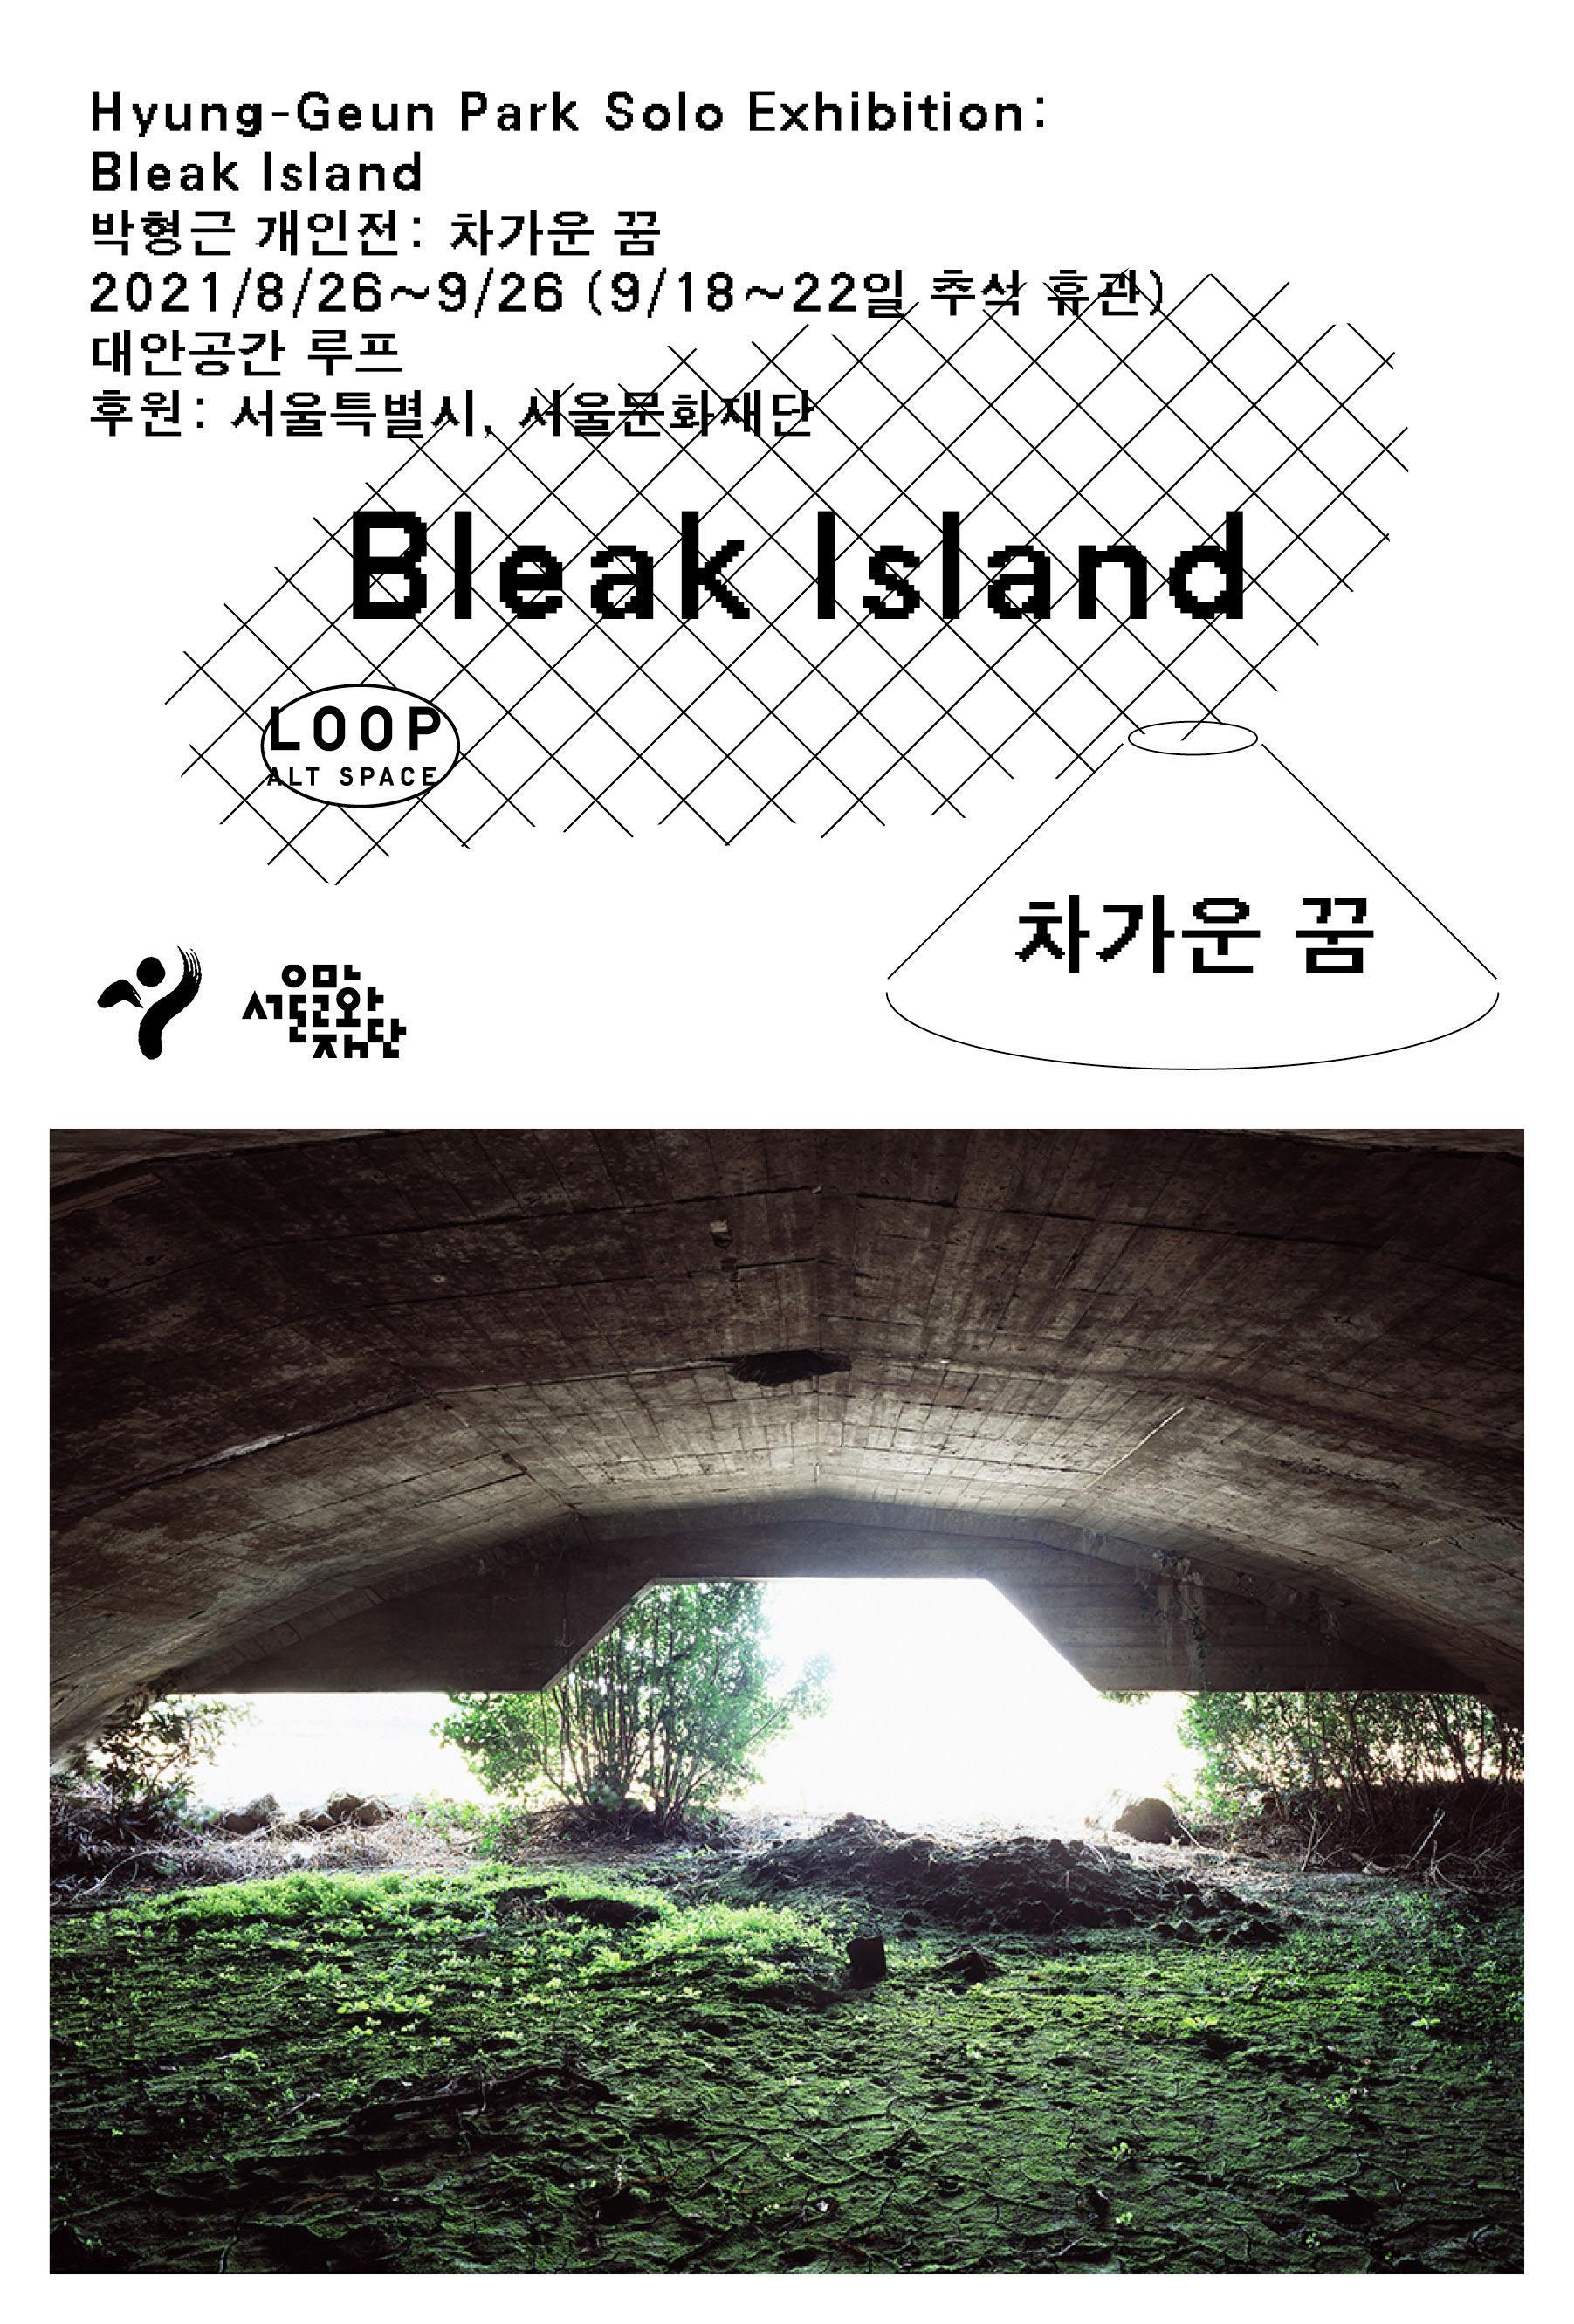 Hyung-Geun Park Solo Exhibition: Bleak Island